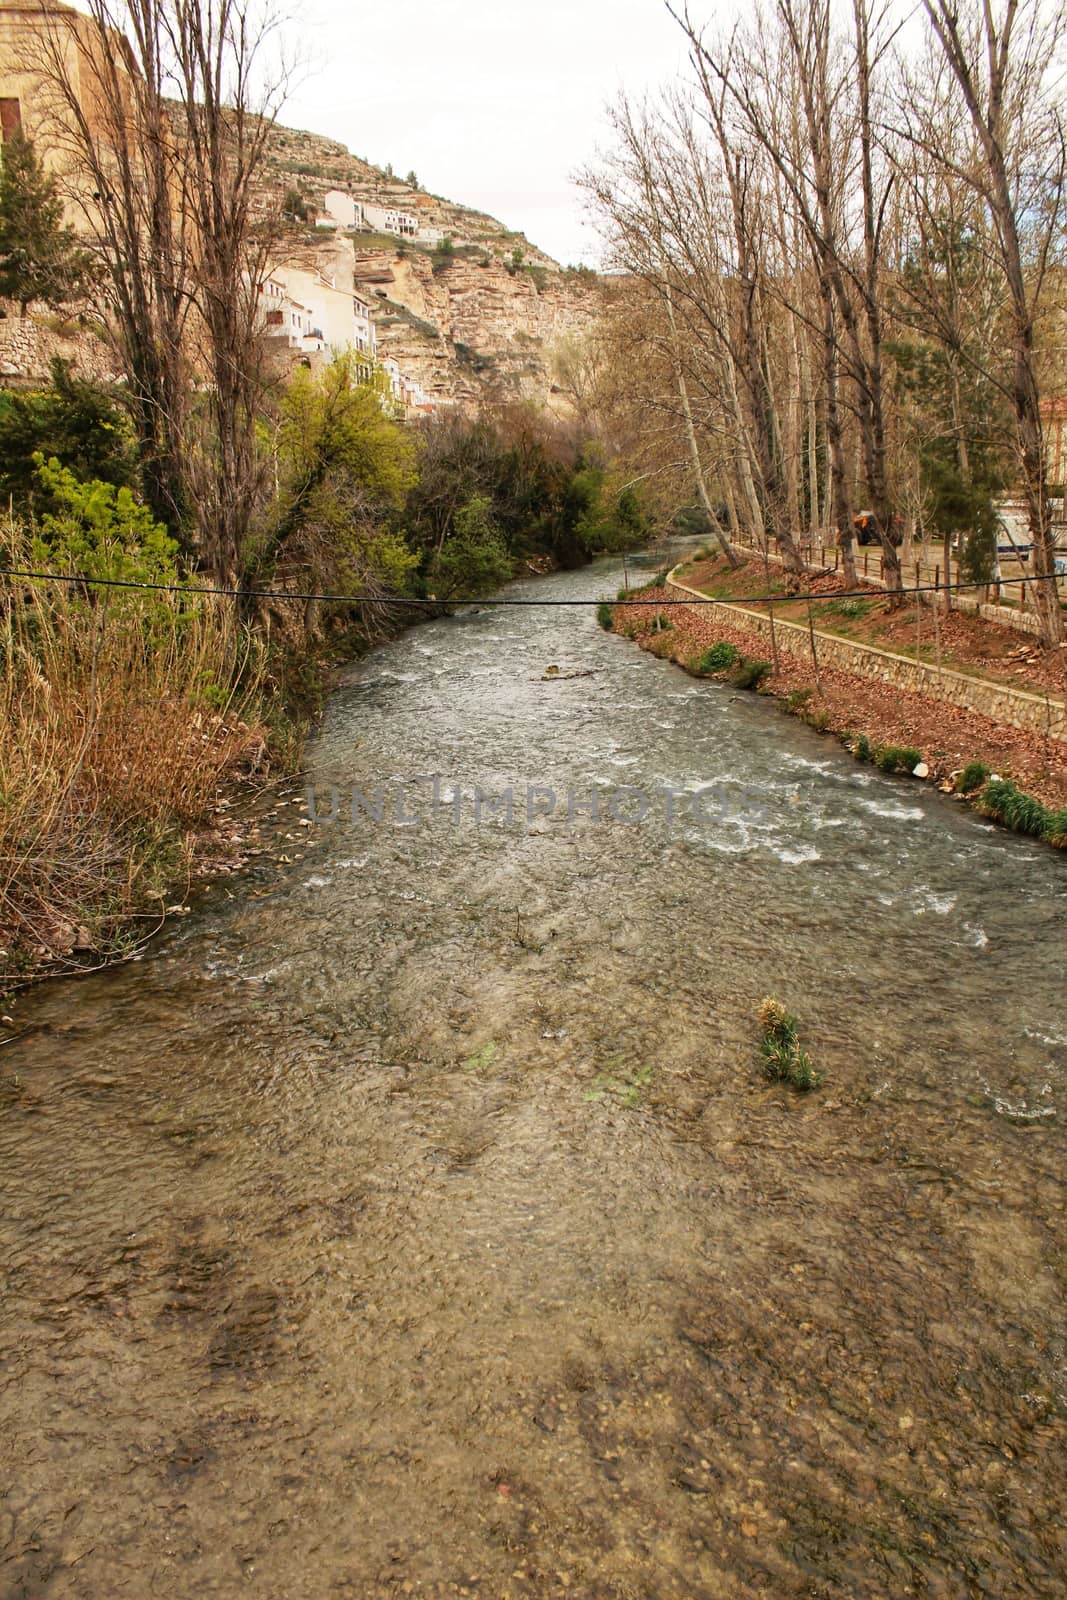 The Jucar River surrounded by vegetation in Alcala del Jucar village